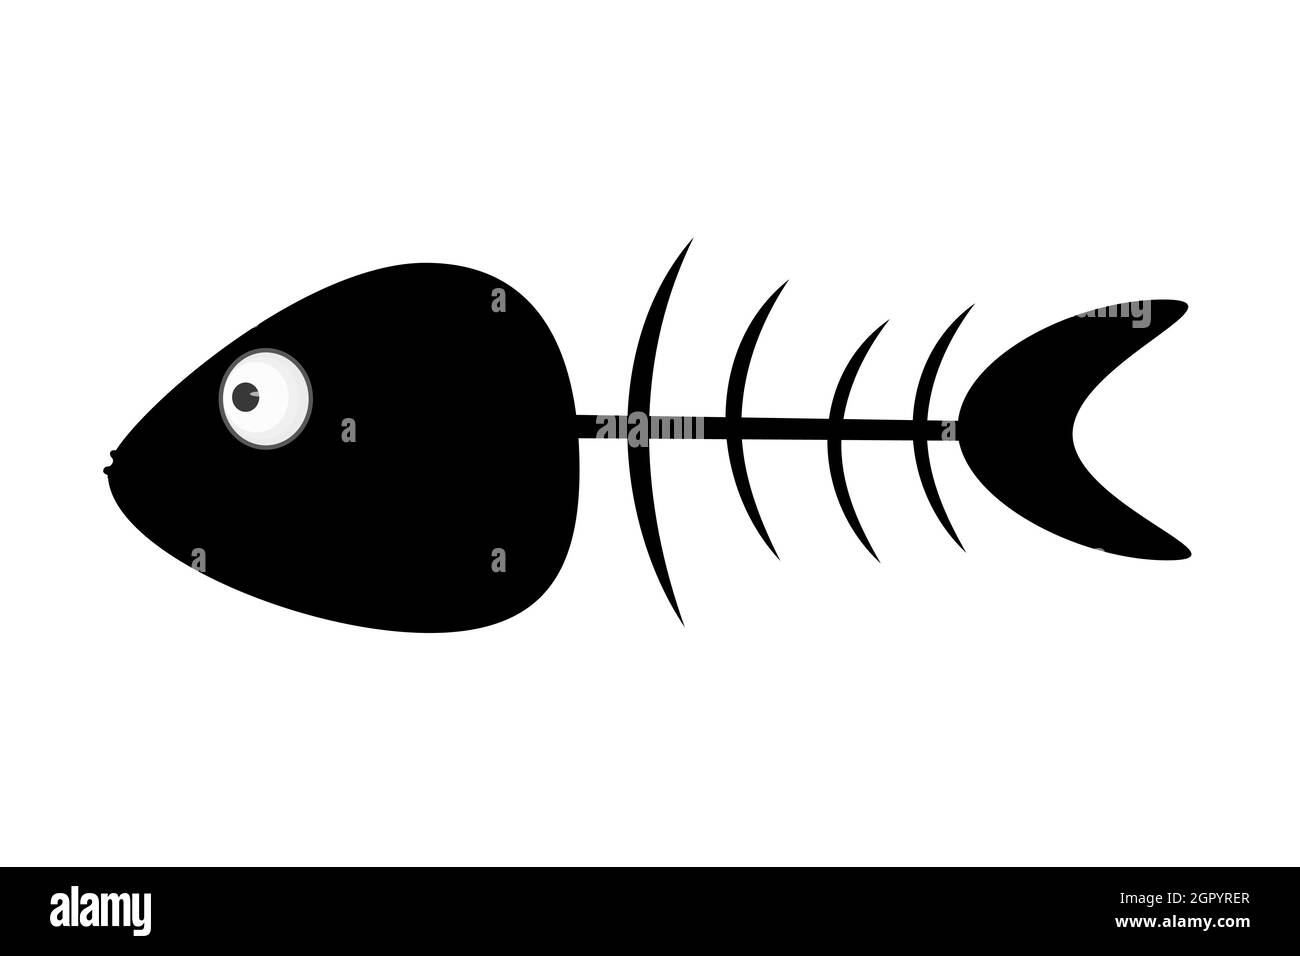 Fishbone icon isolated on white background. Black fish bone silhouette. Fish skeleton simple sign. Organic waste mark design.Stock vector illustration Stock Vector